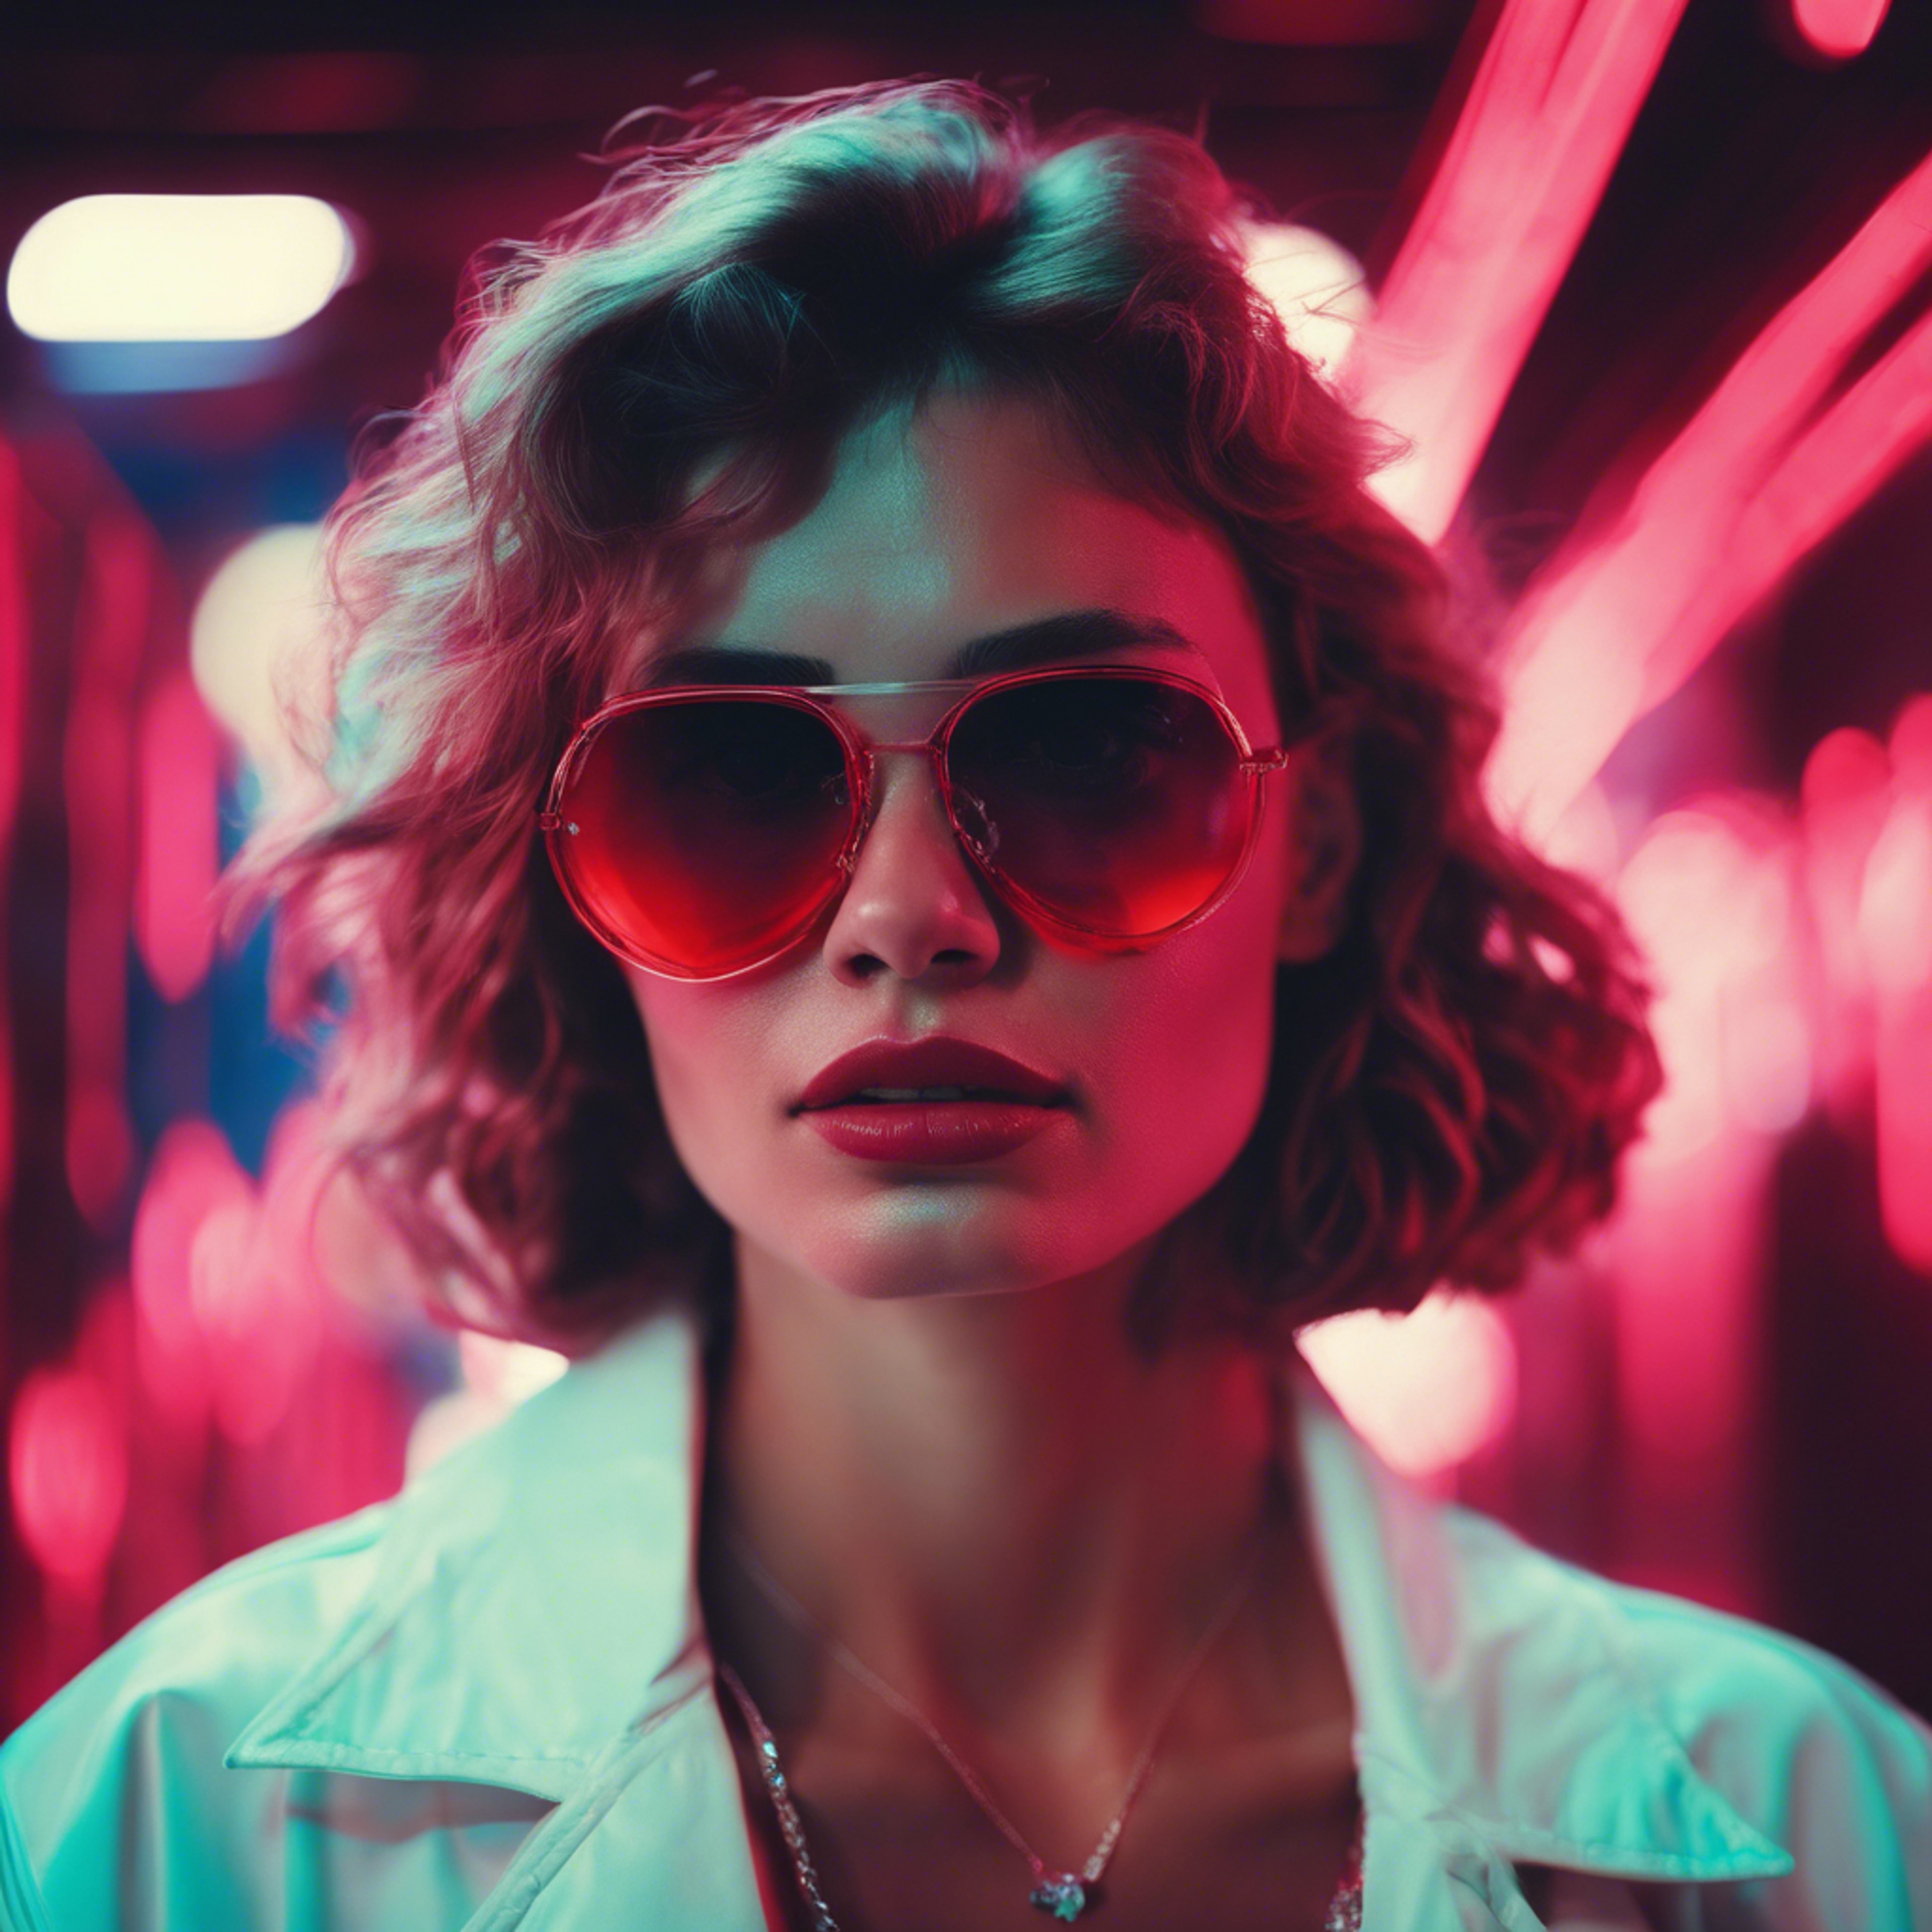 Retro 80's style portrait of a woman in sunglasses lit by cool red neon lights. ផ្ទាំង​រូបភាព[9fb655559f07479e9c29]